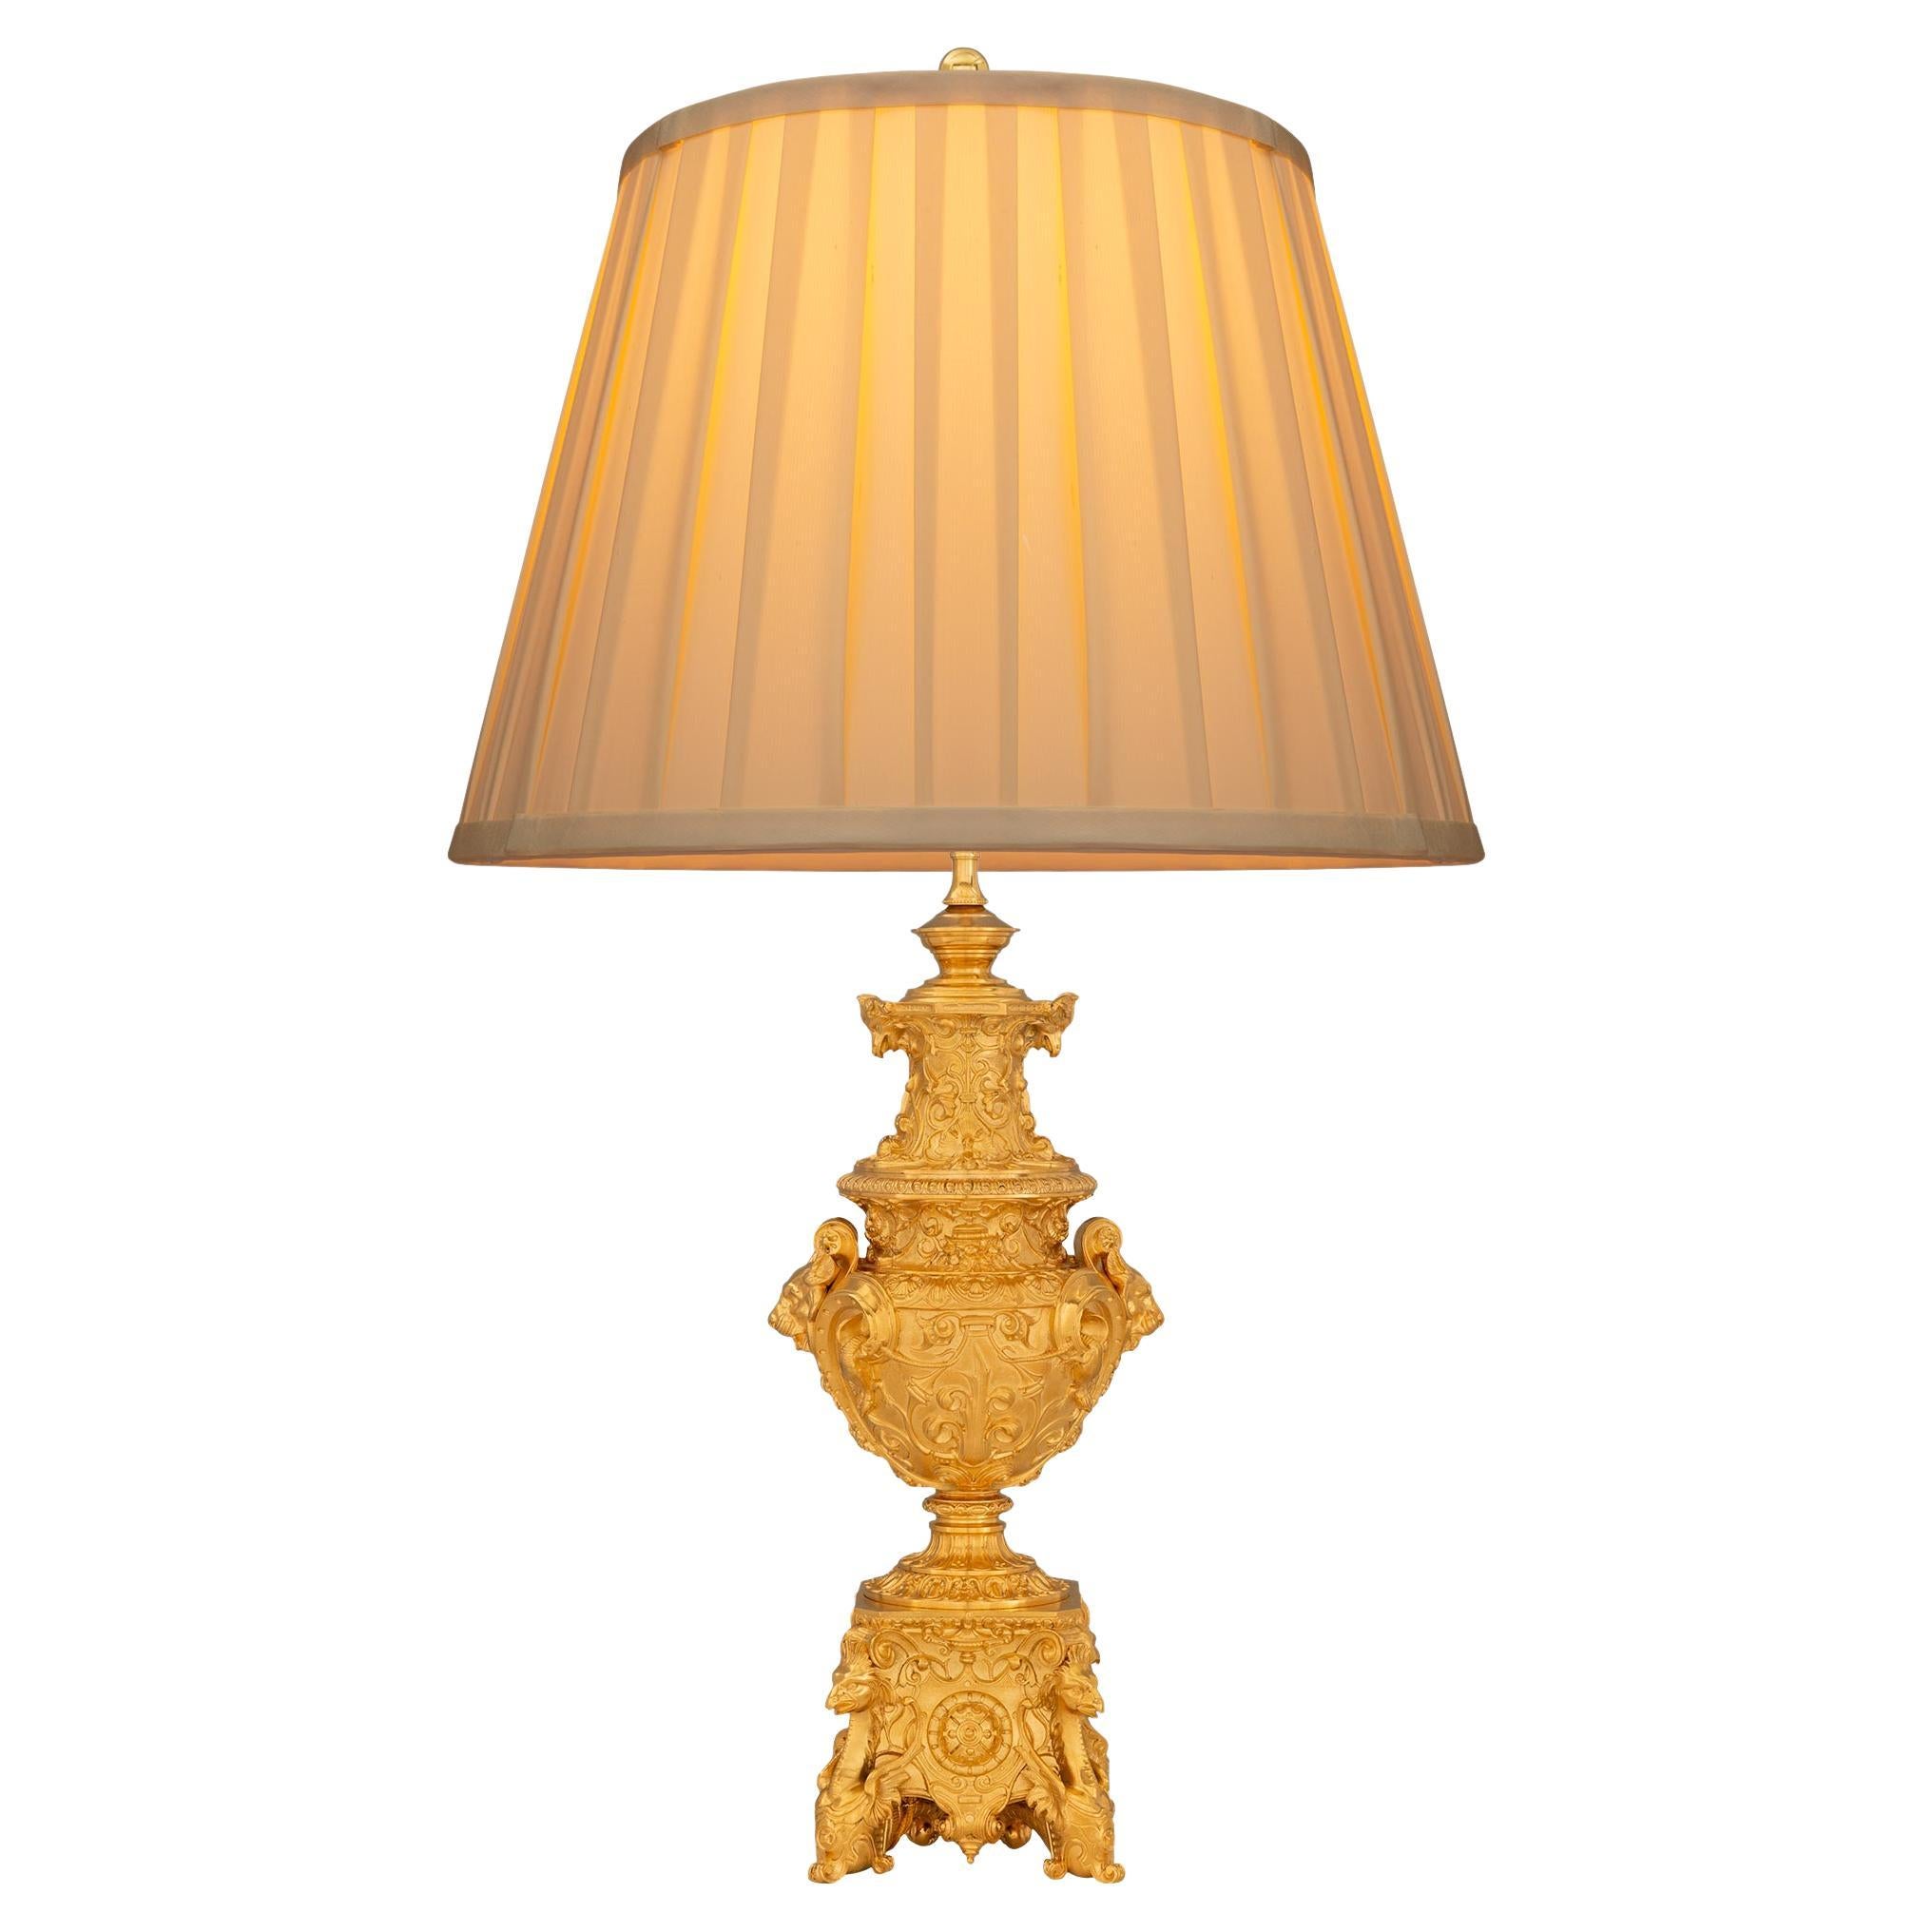 Renaissance-Stil-Goldbronze-Lampe, 19. Jahrhundert